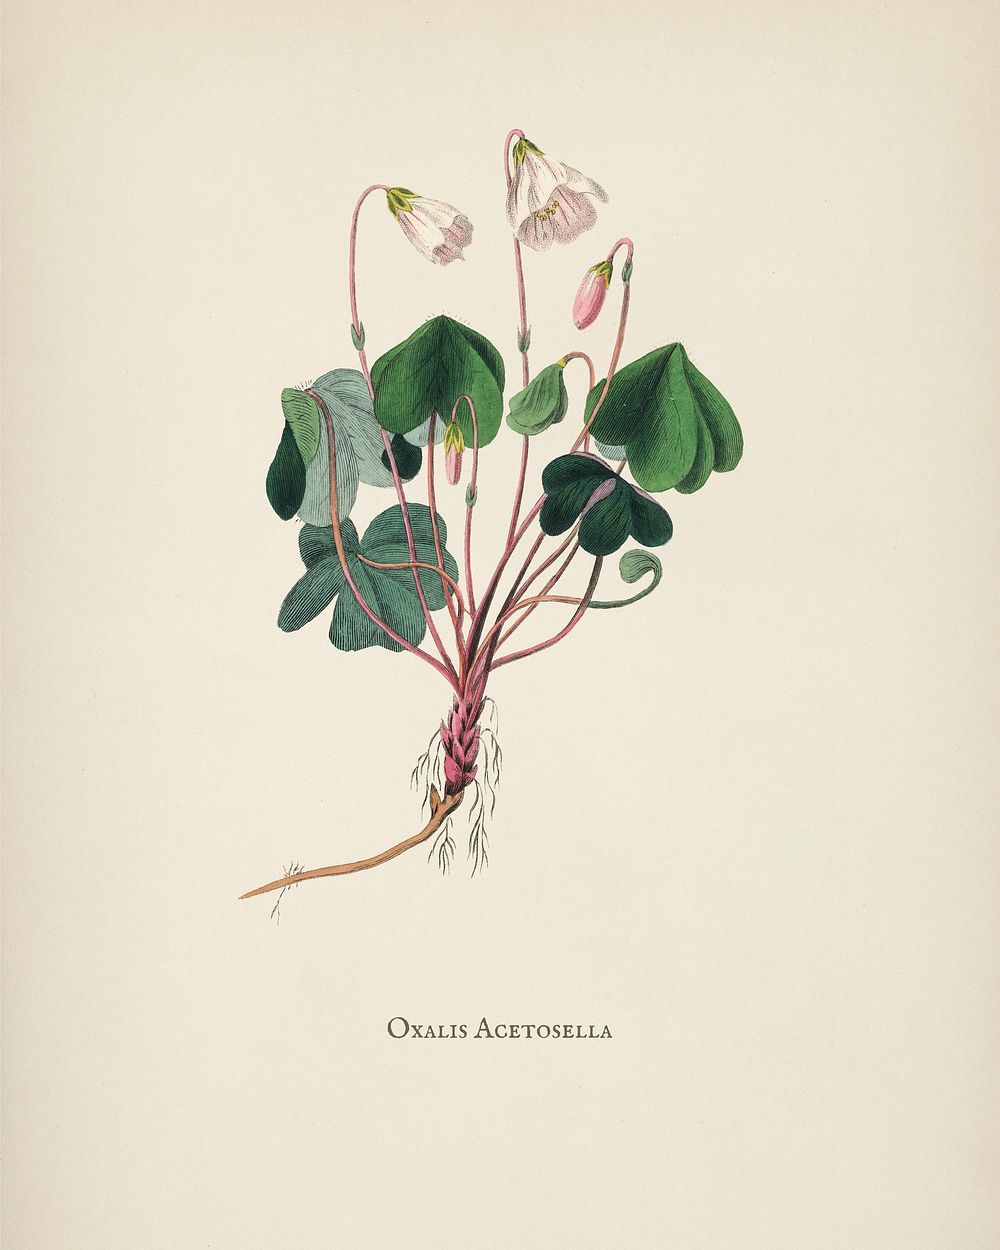 Wood sorrel  (Oxalis acetosella) illustration from Medical Botany (1836) by John Stephenson and James Morss Churchill.